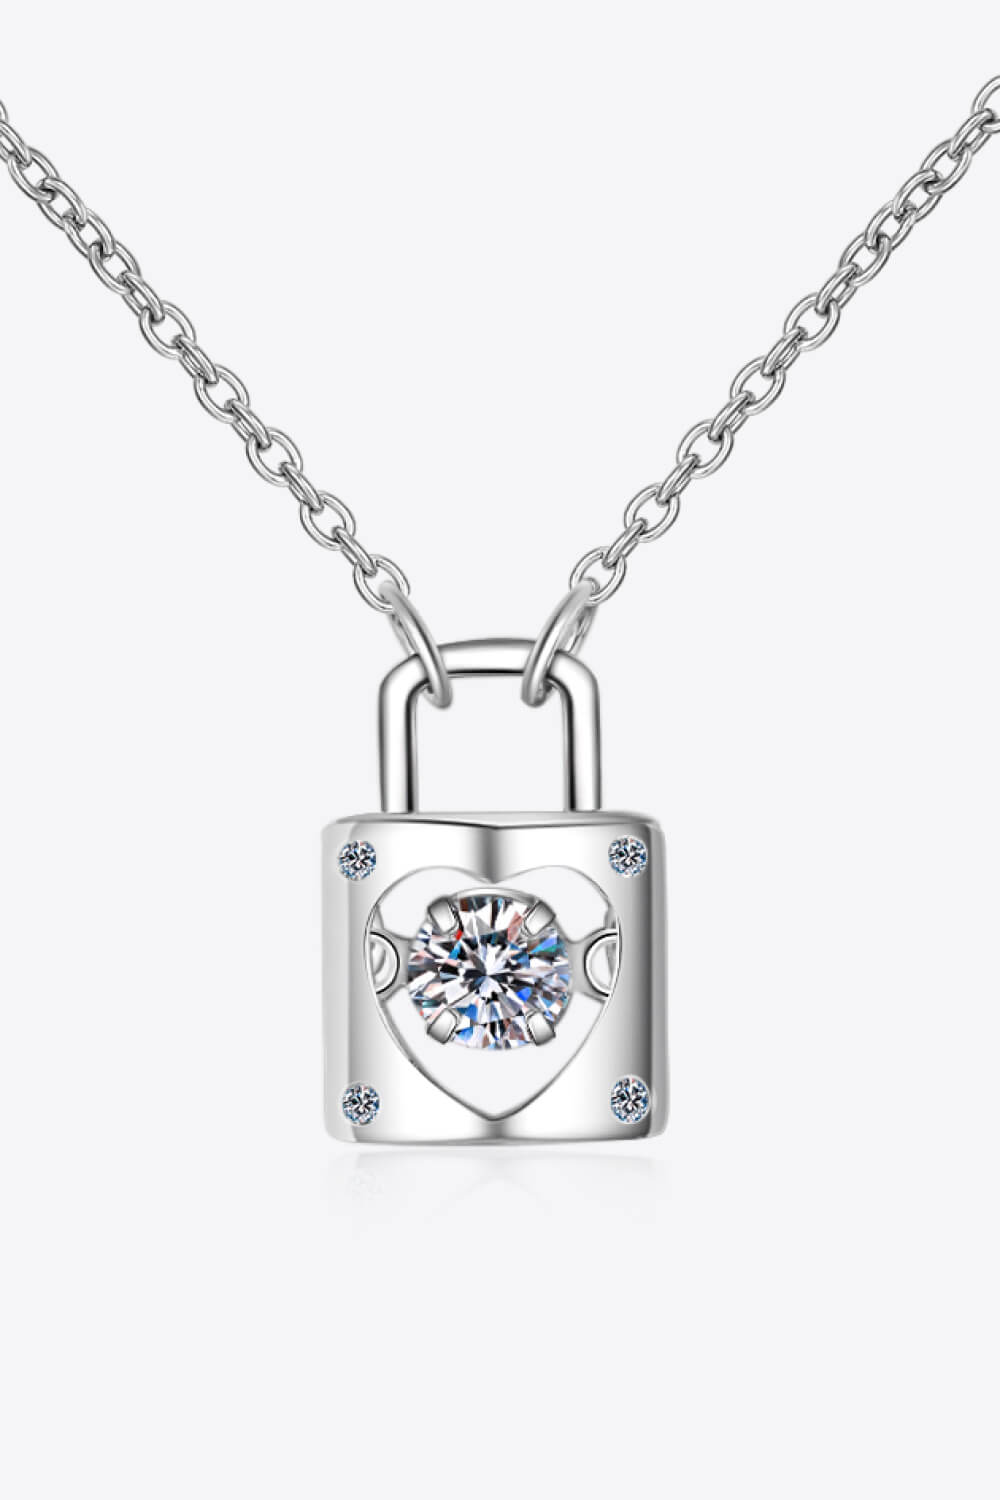 Lockit Key pendant, white gold and diamonds - Luxury Silver